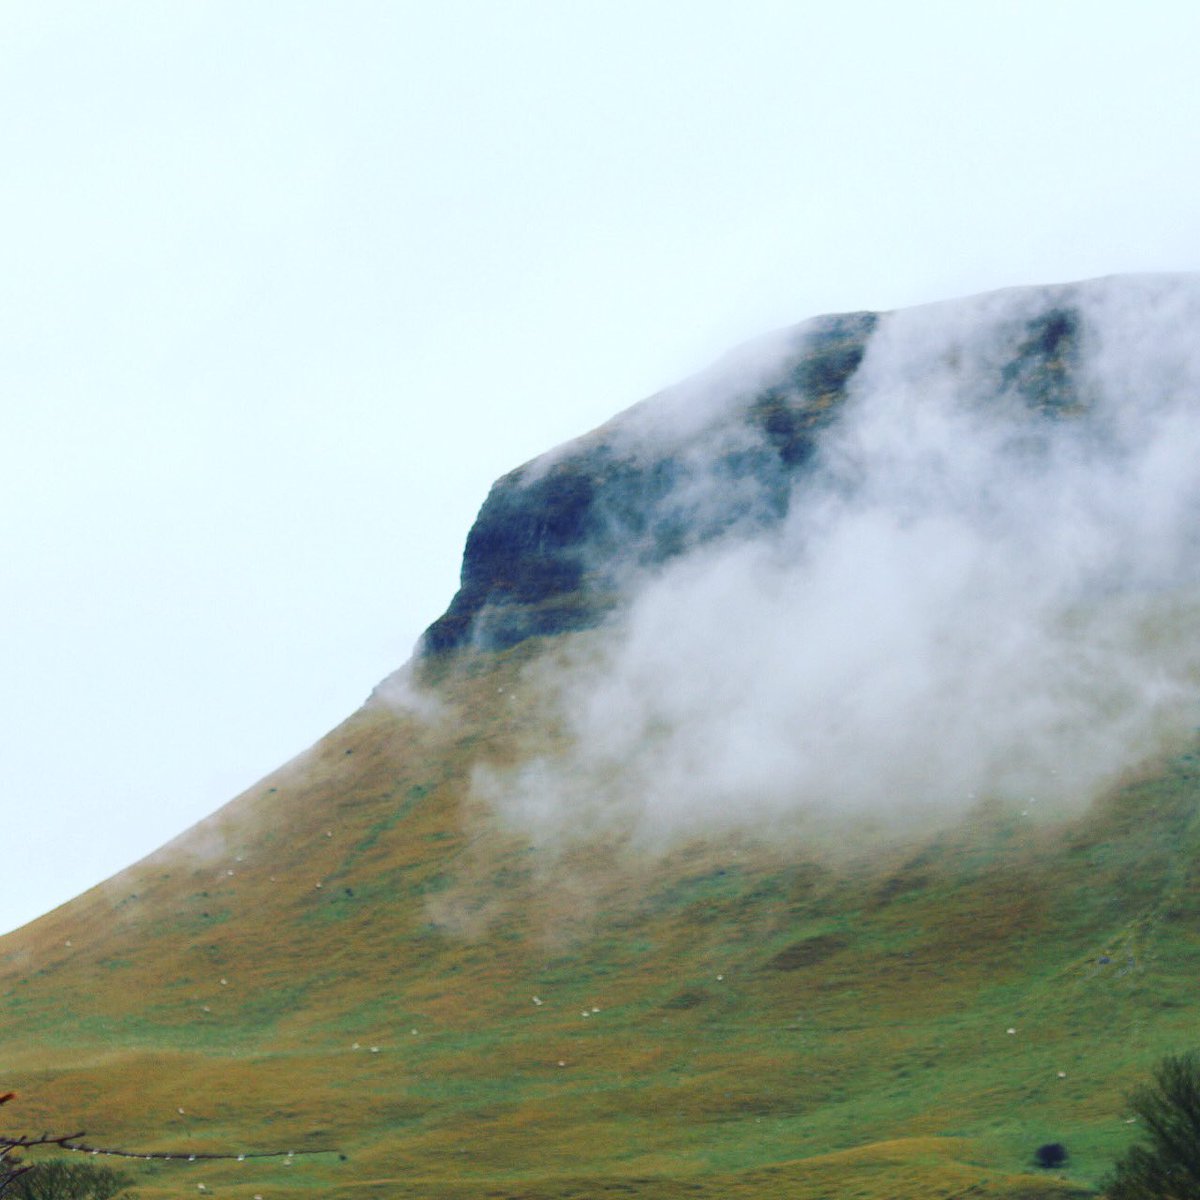 Benbulben cloaked in clouds today 💙#Sligo #WildAtlanticWay #connaught #whyireland #visitsligo #choosemore @Failte_Ireland #bestofsligo @DiscoverIreland